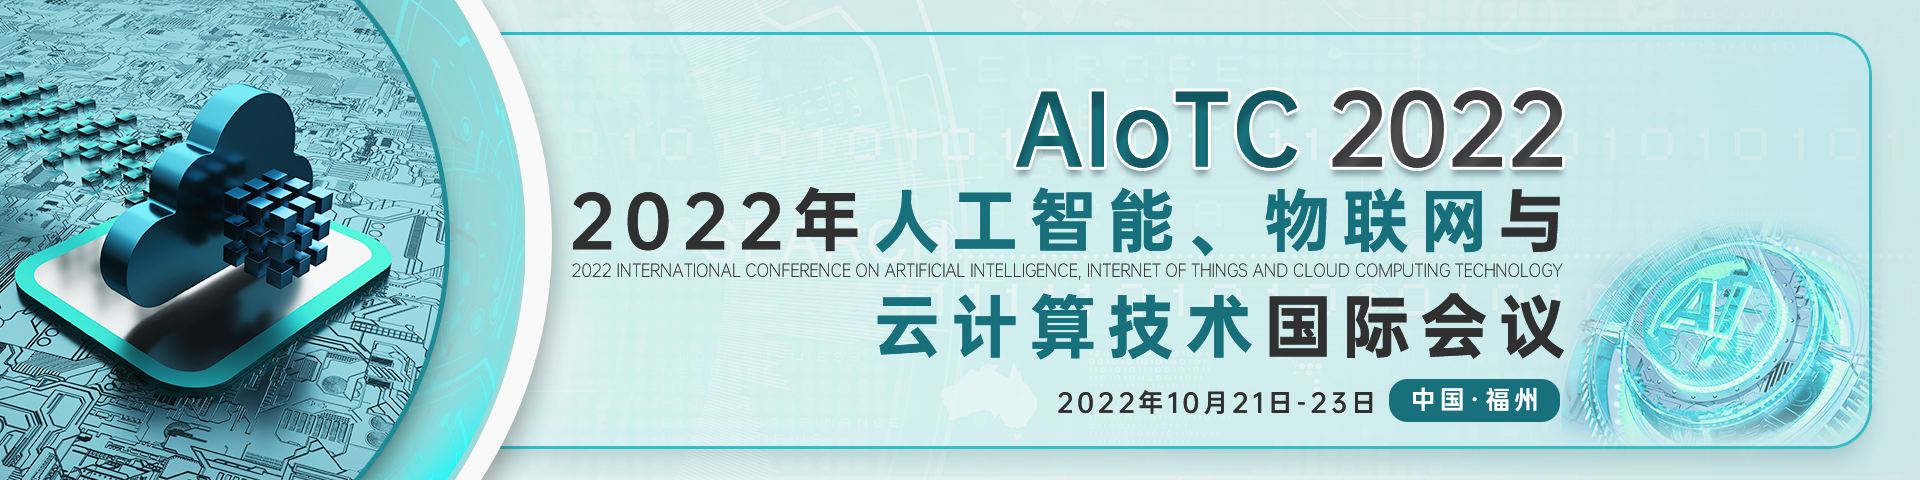 10月福州AIoTC2022-会议官网中文banner-何雪仪-20211231.png